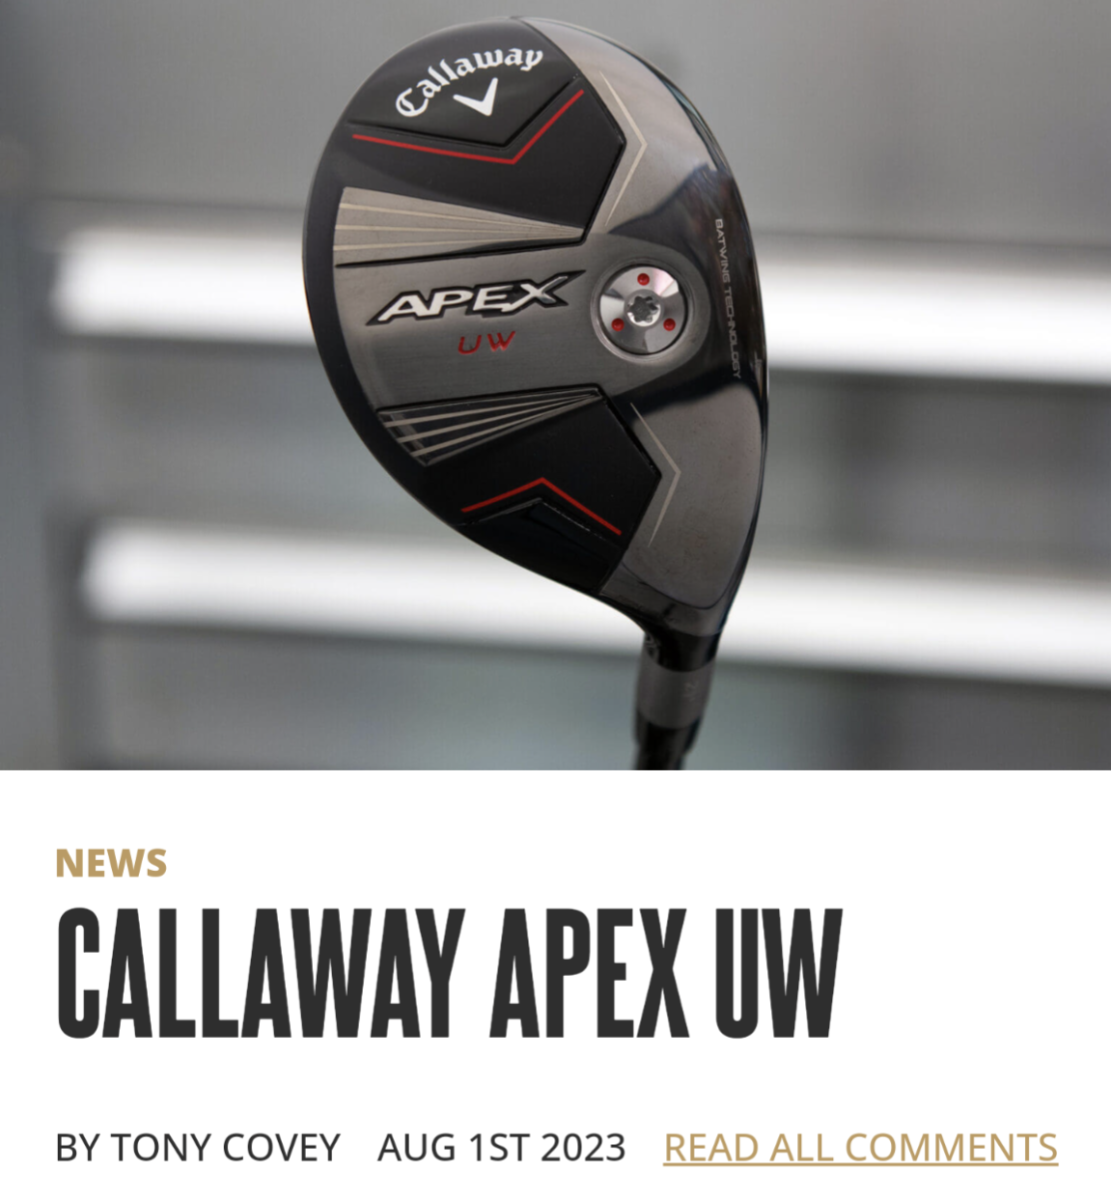 New Callaway Apex UW - Golf Clubs - MyGolfSpy Forum